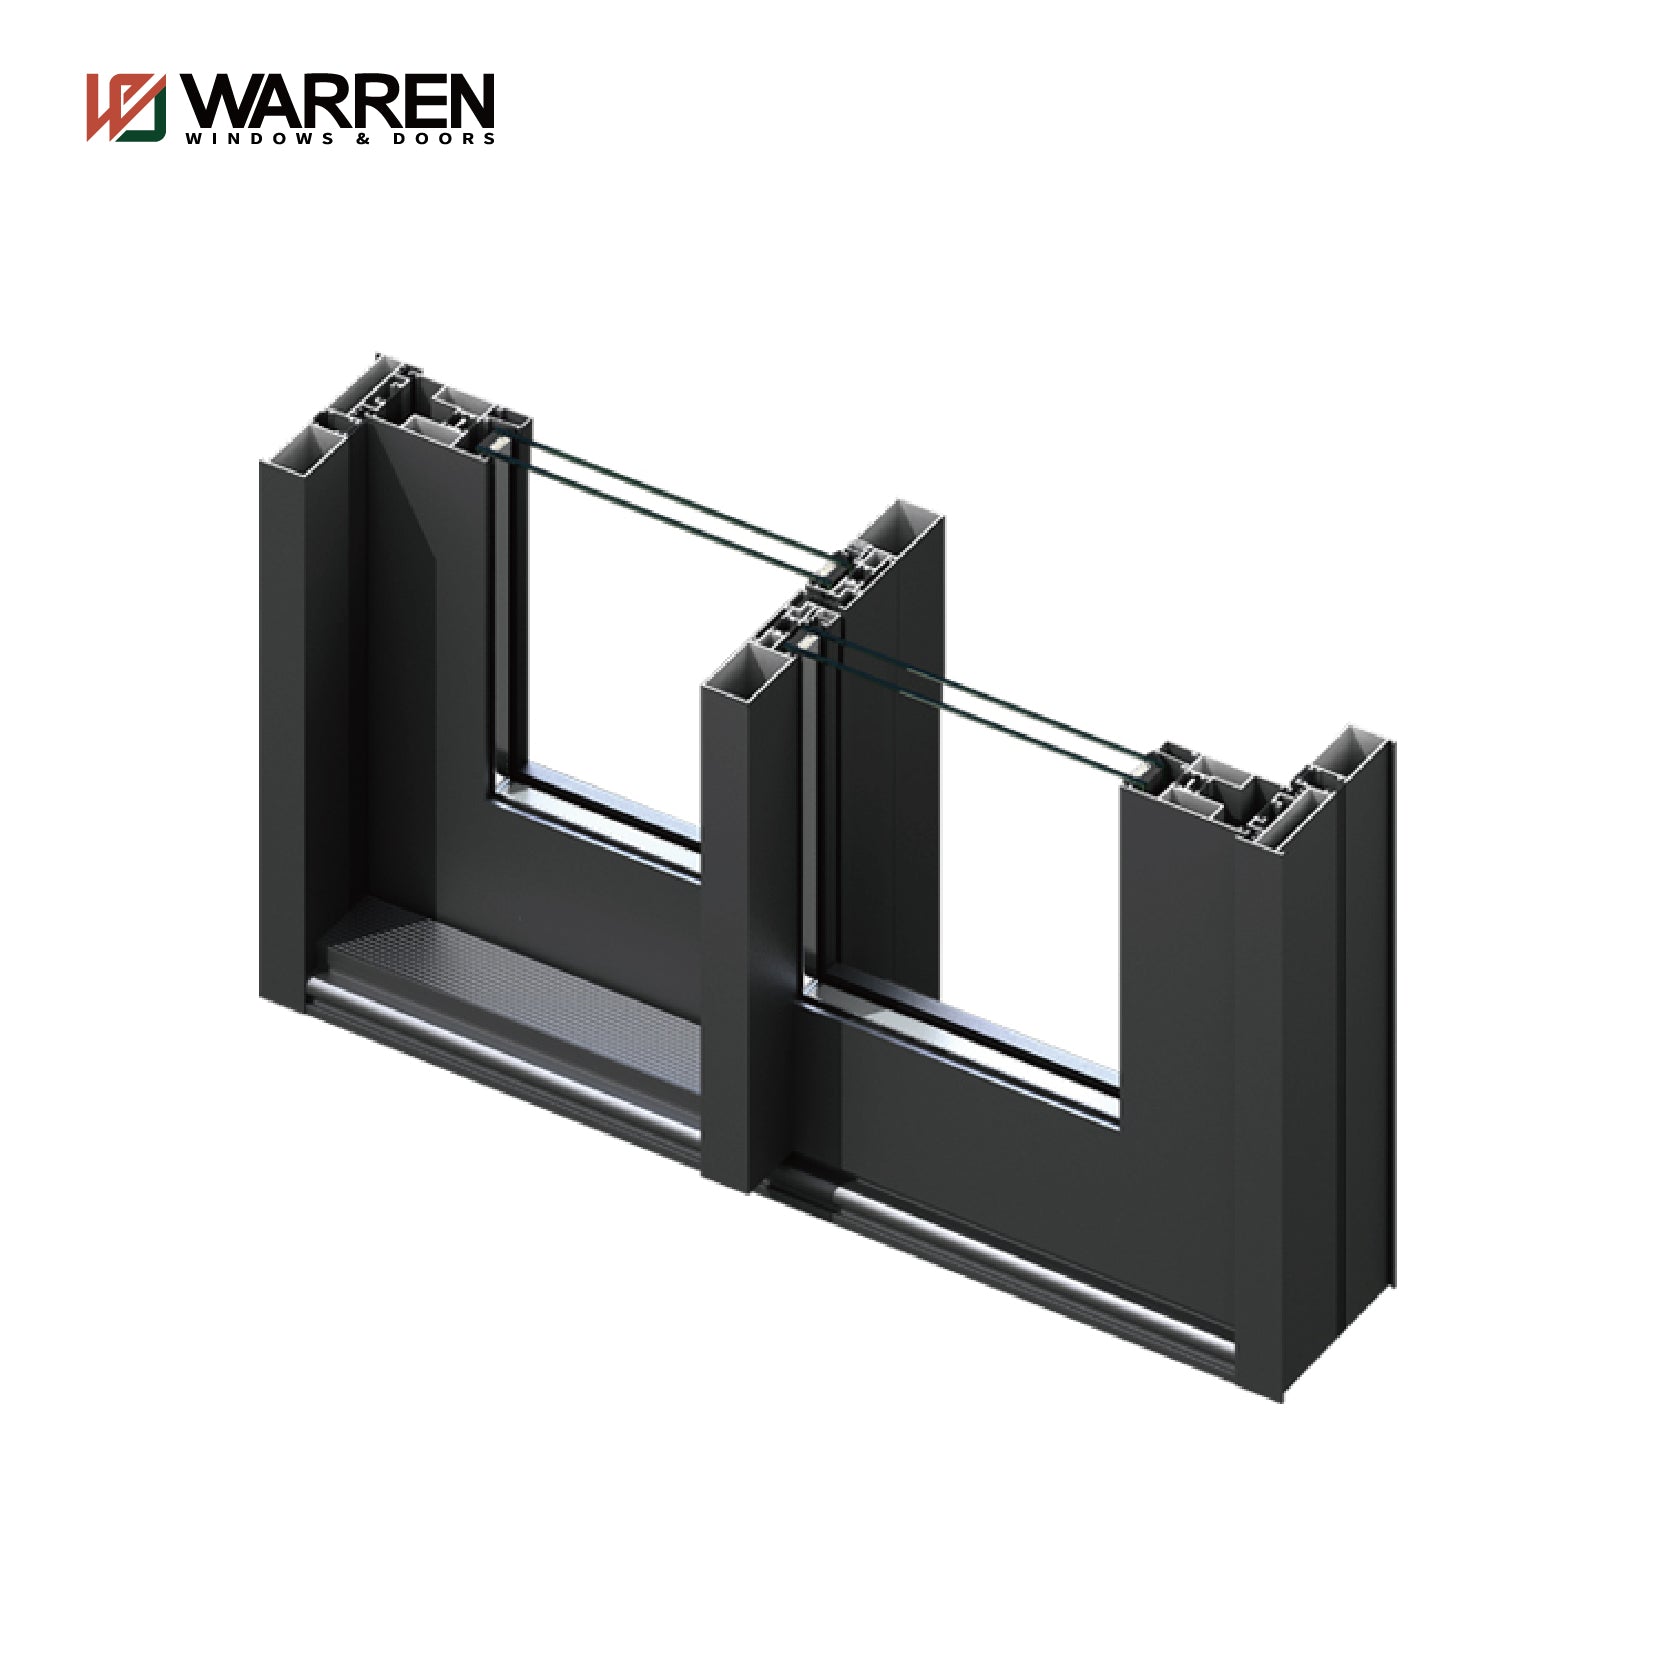 Warren Factory Sale Lift And Sliding Doors Superhouse Aluminium Frame Doors Used For Modern Sunroom